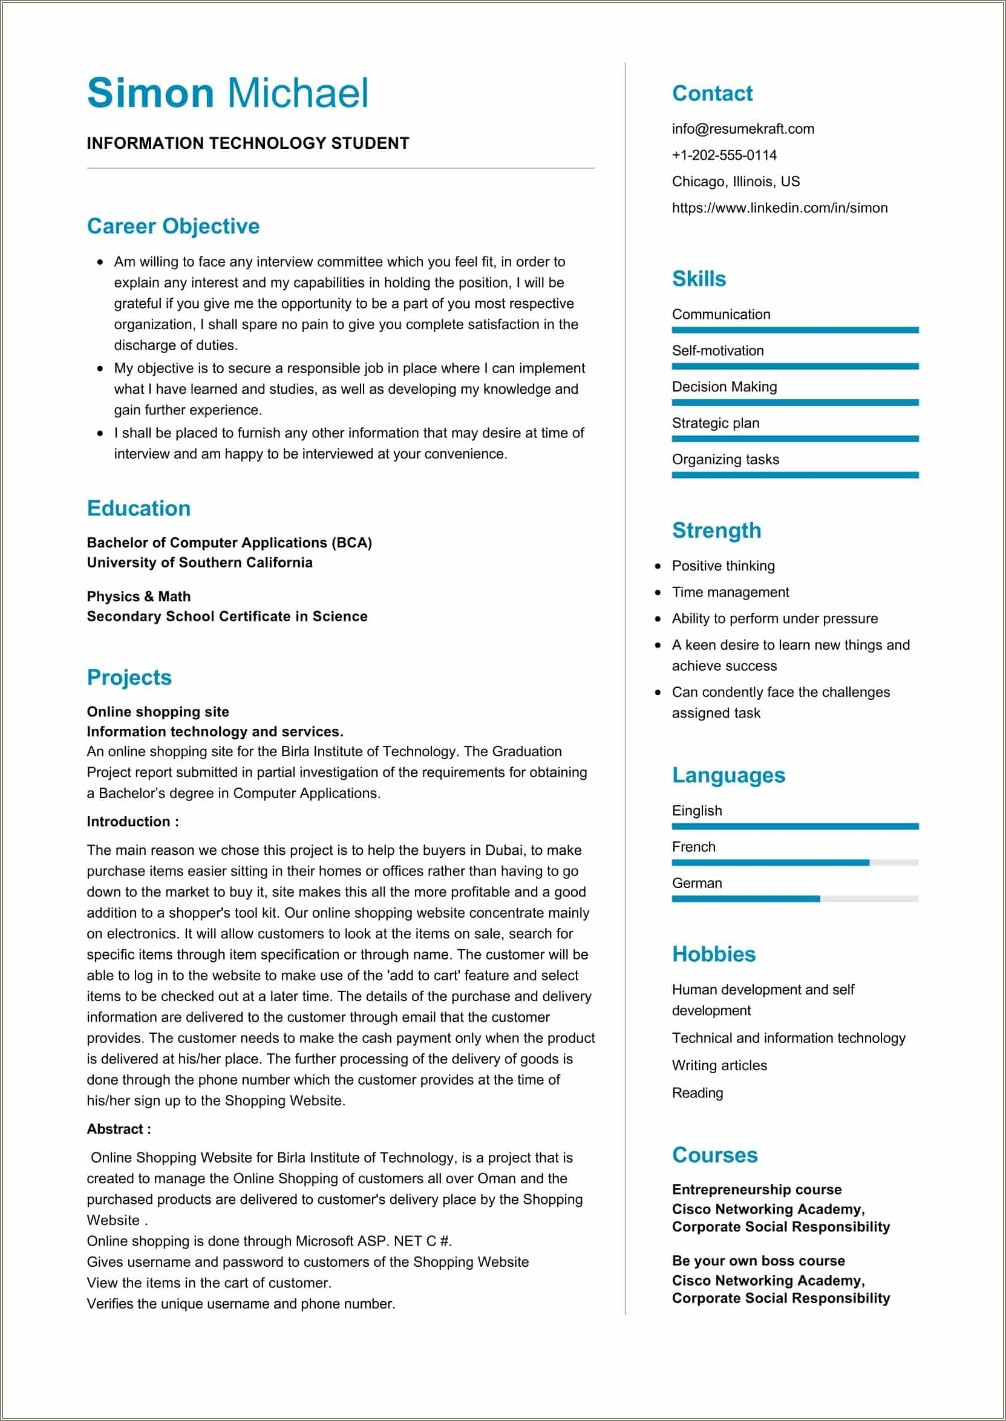 Corporate Social Responsibility Jobs Description Resume